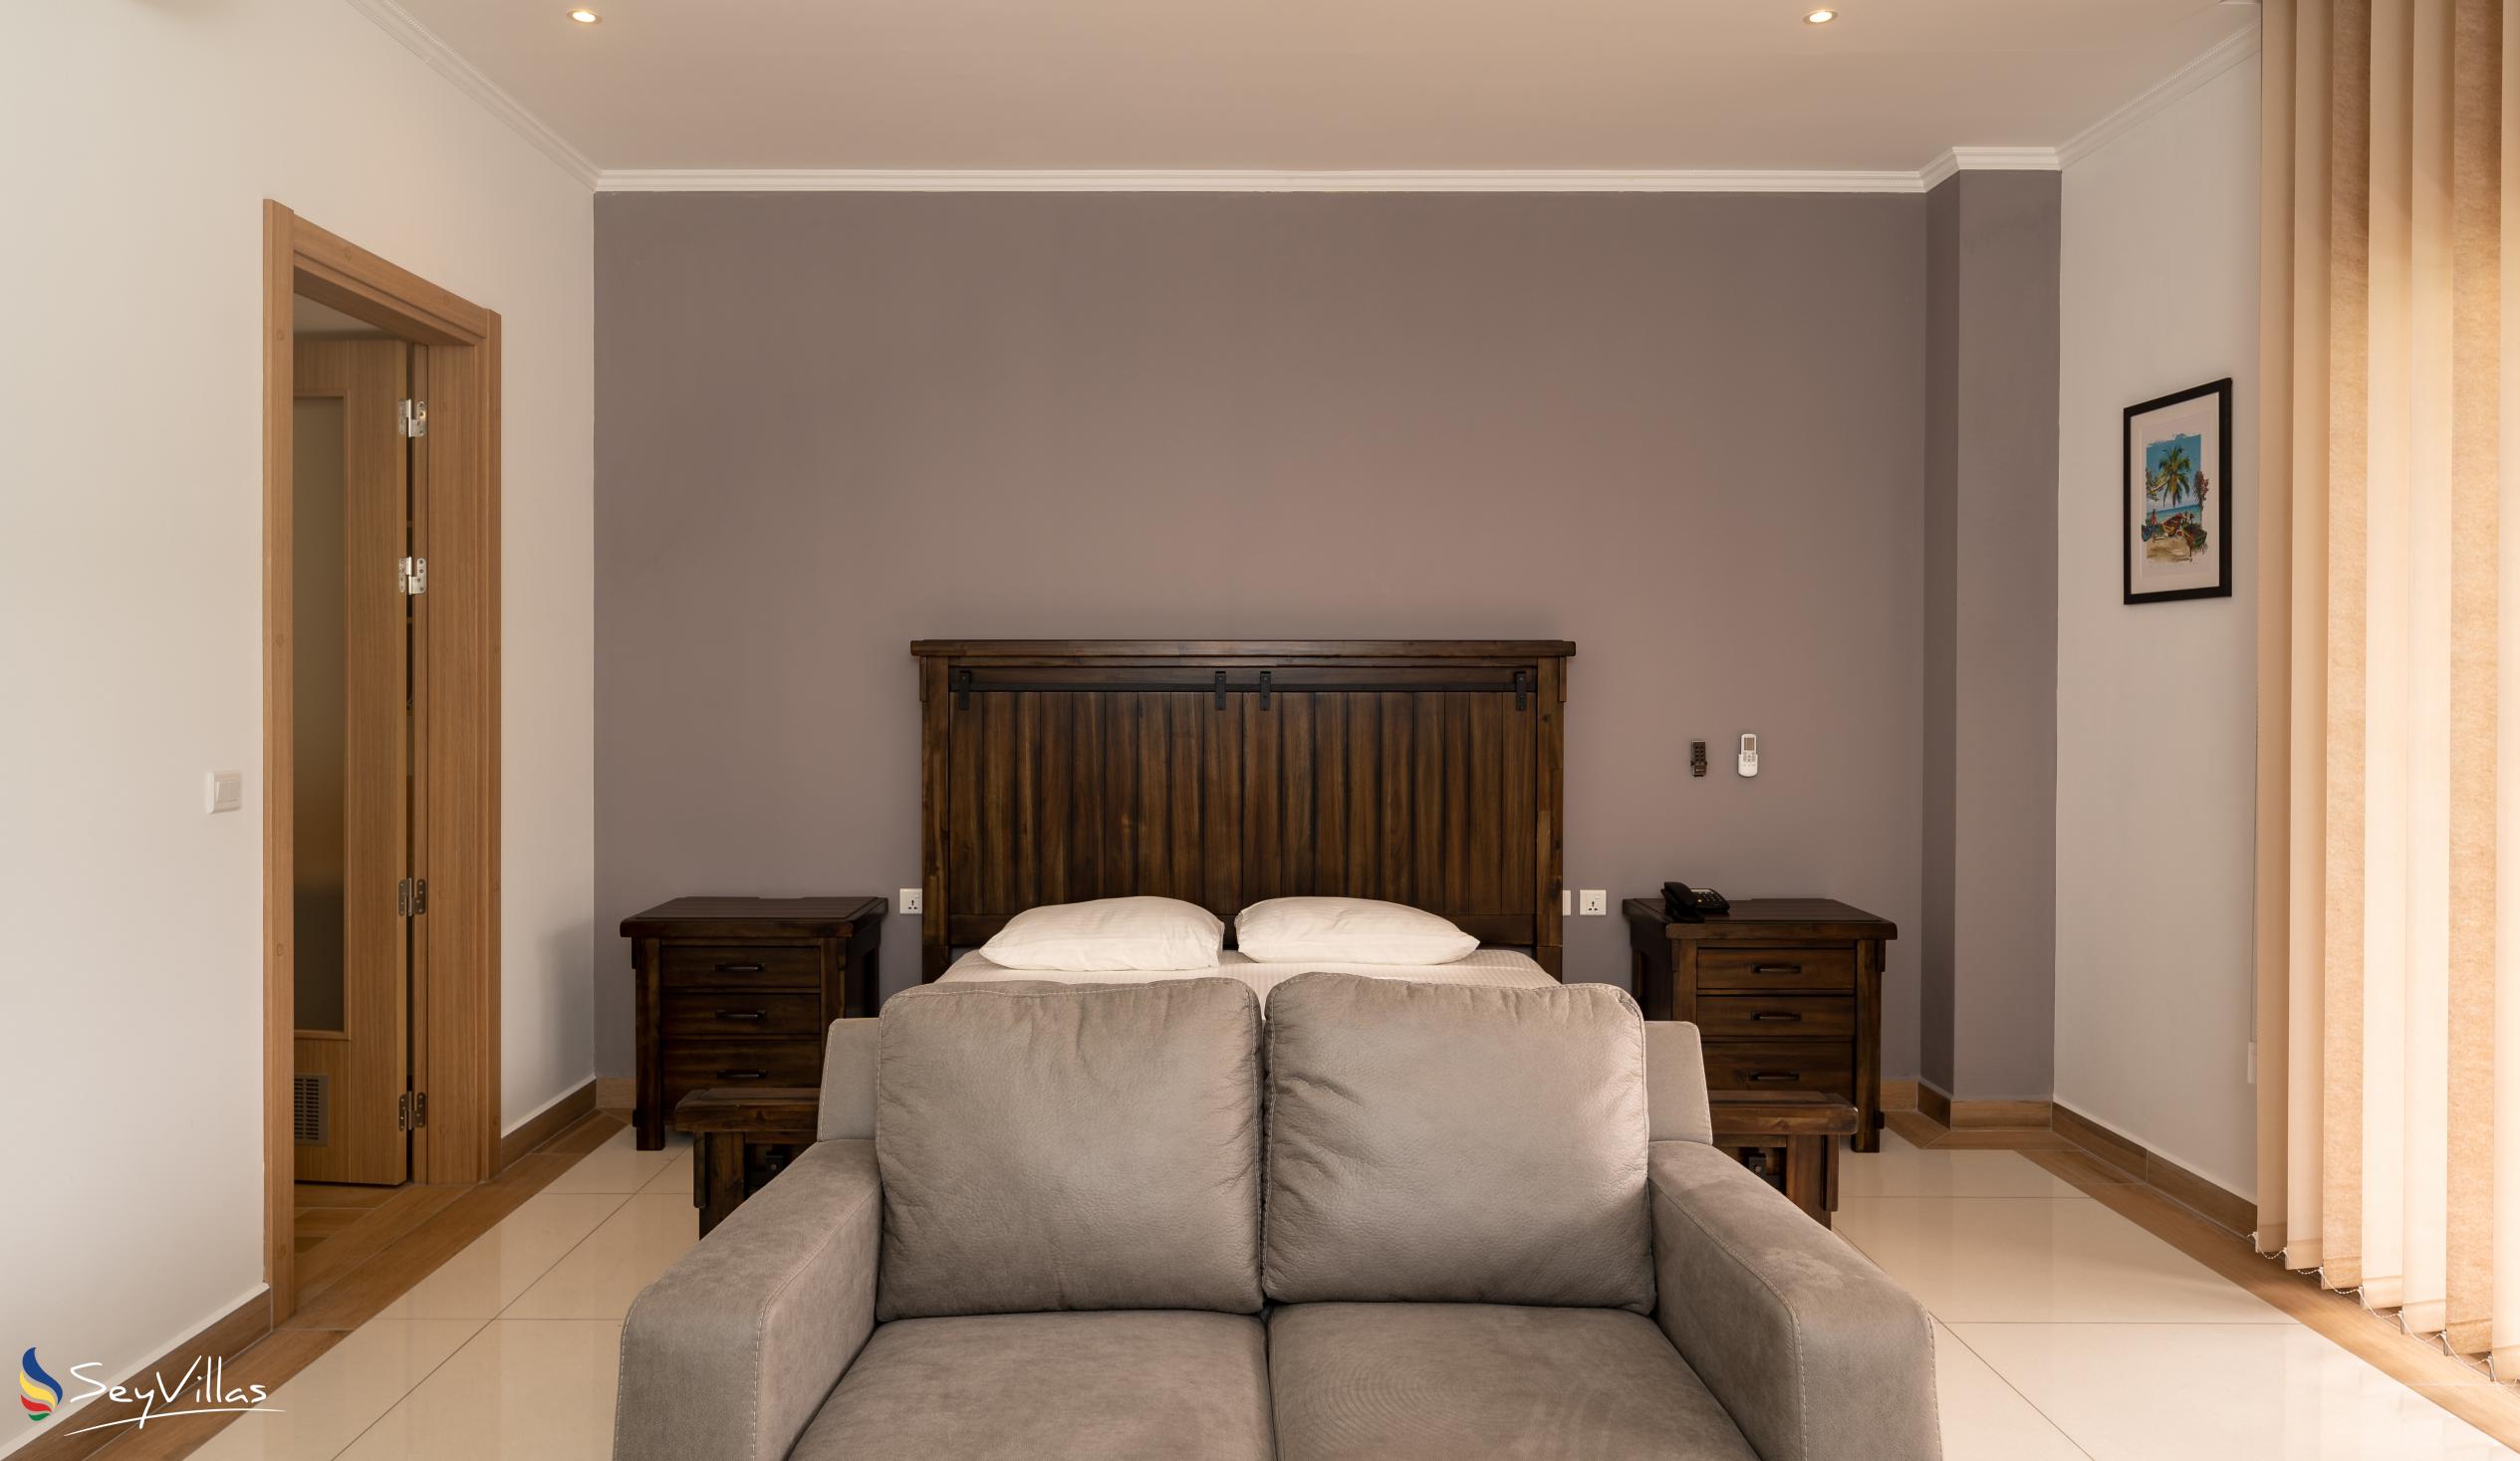 Photo 48: Royale Suites by Arc Royale Luxury Apartments - 1-Bedroom Apartment - Mahé (Seychelles)